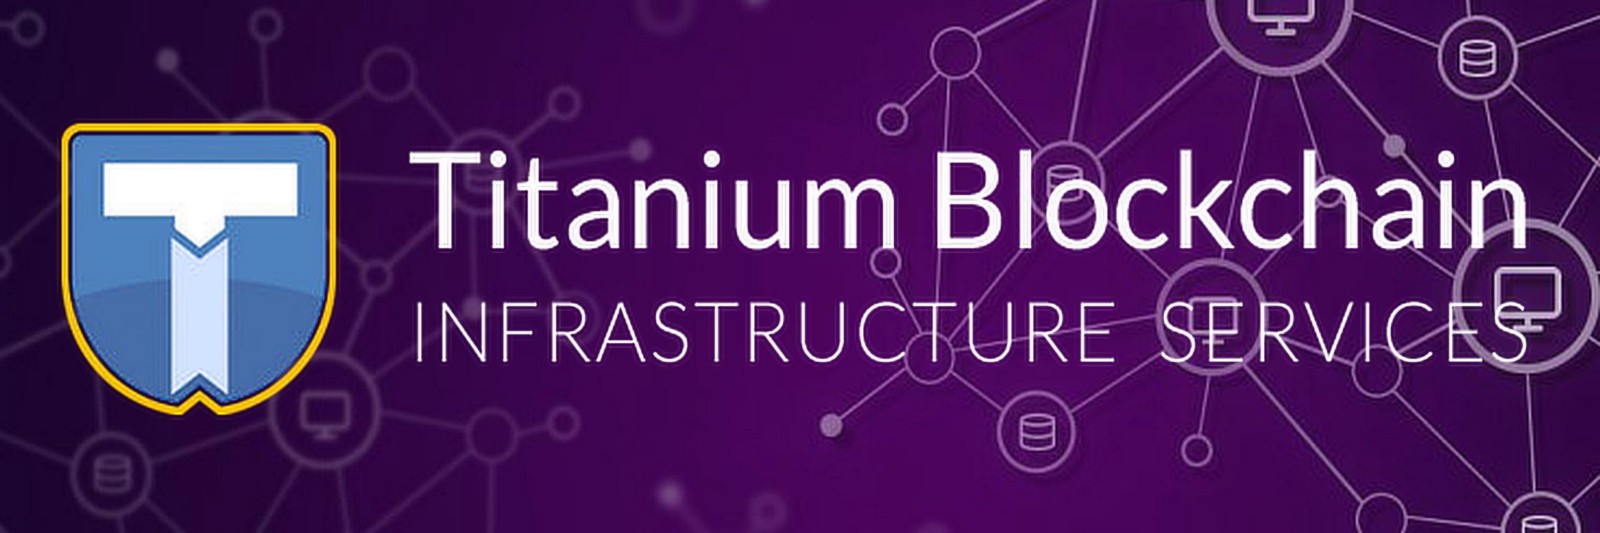 trading-titanium-blockchain-infrastructure-service.jpeg